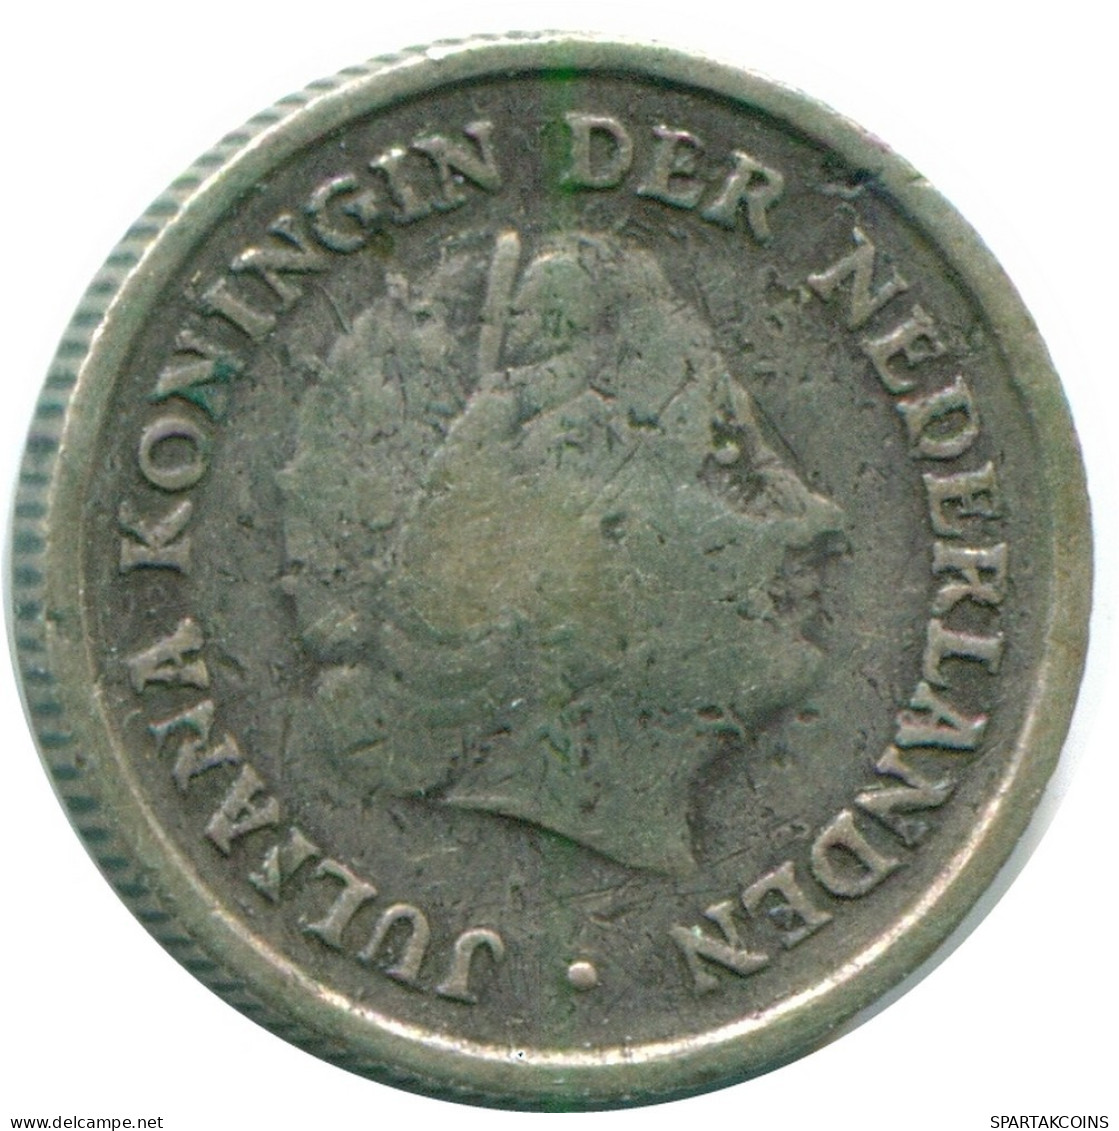 1/10 GULDEN 1956 NIEDERLÄNDISCHE ANTILLEN SILBER Koloniale Münze #NL12120.3.D.A - Netherlands Antilles